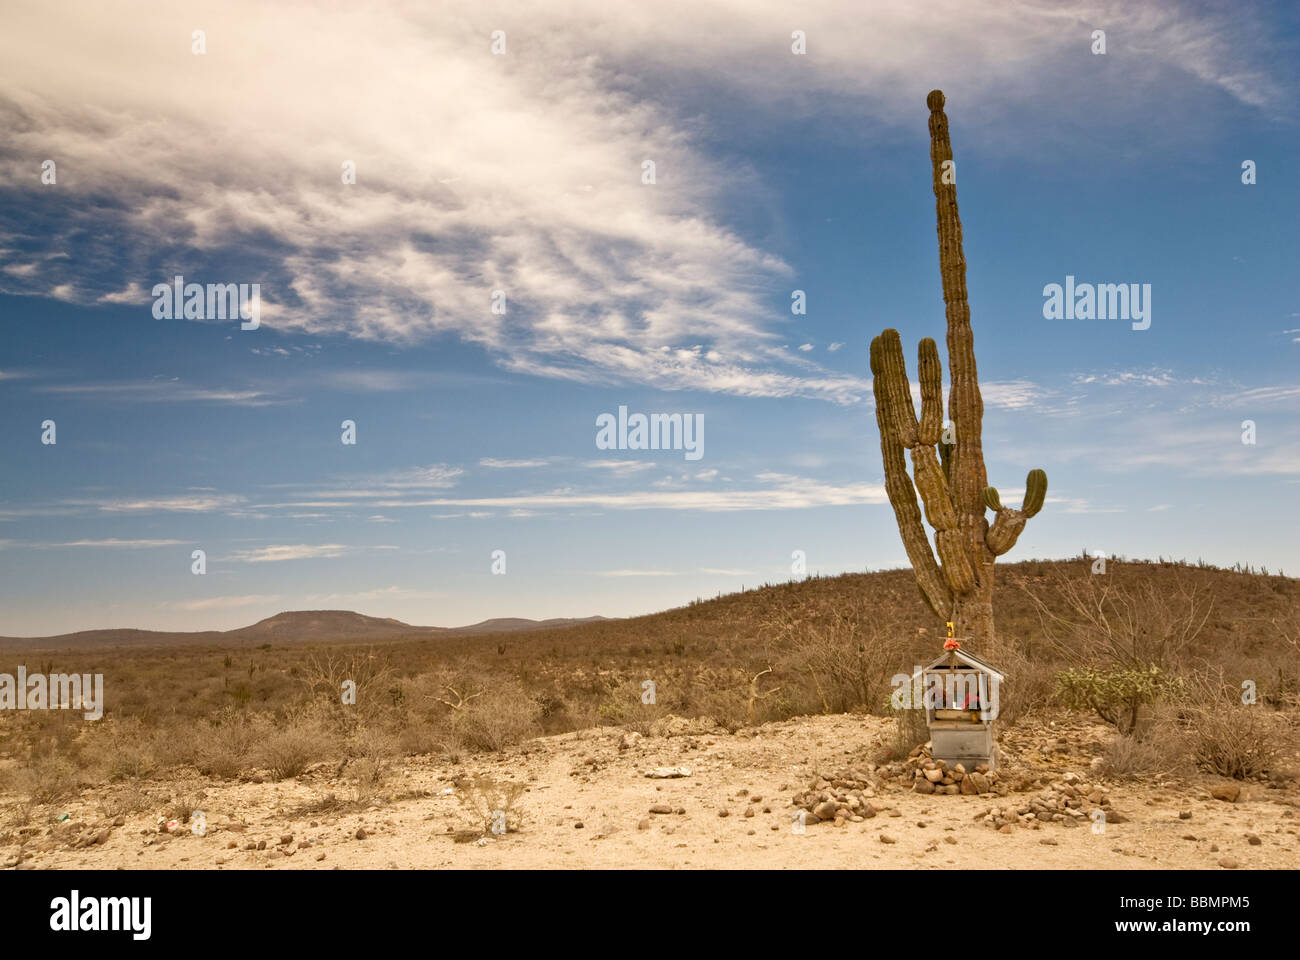 Shrine at cardon cactus in Sierra de la Giganta near Mision San Luis Gonzaga Baja California Sur Mexico Stock Photo